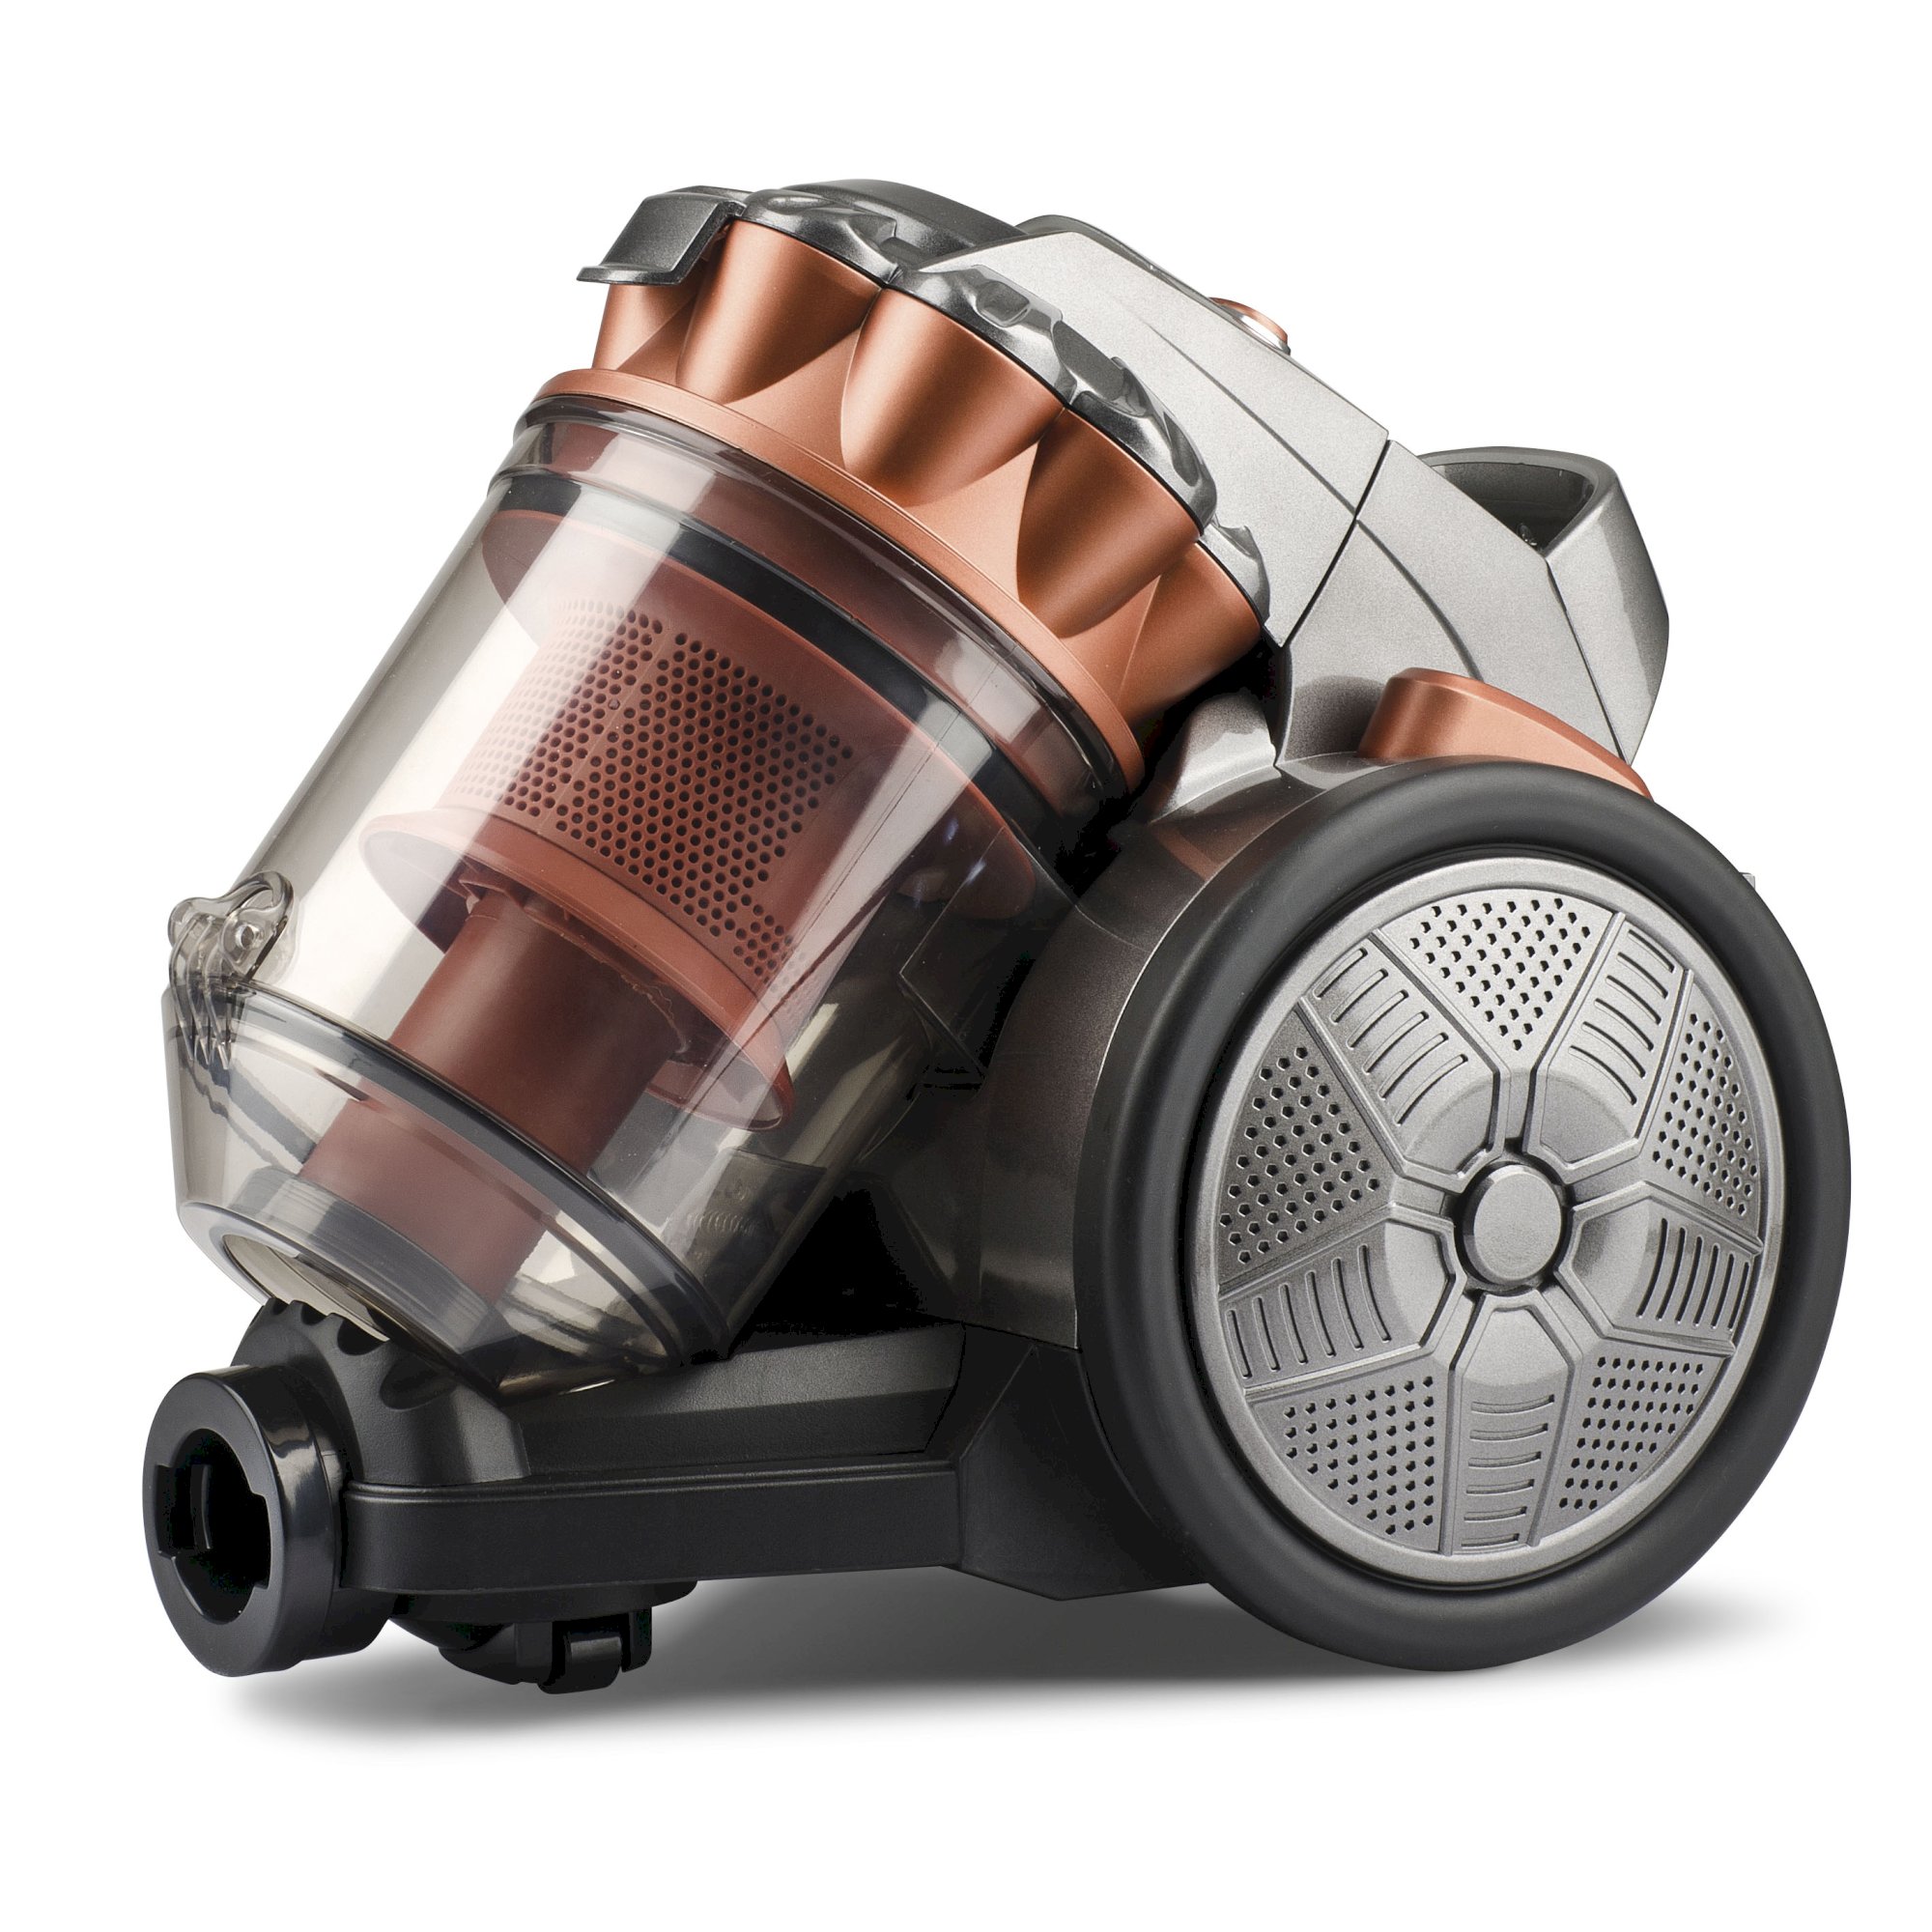 G9000300, Eco Design, cyclone vacuum cleaner, 700W, silver/copper